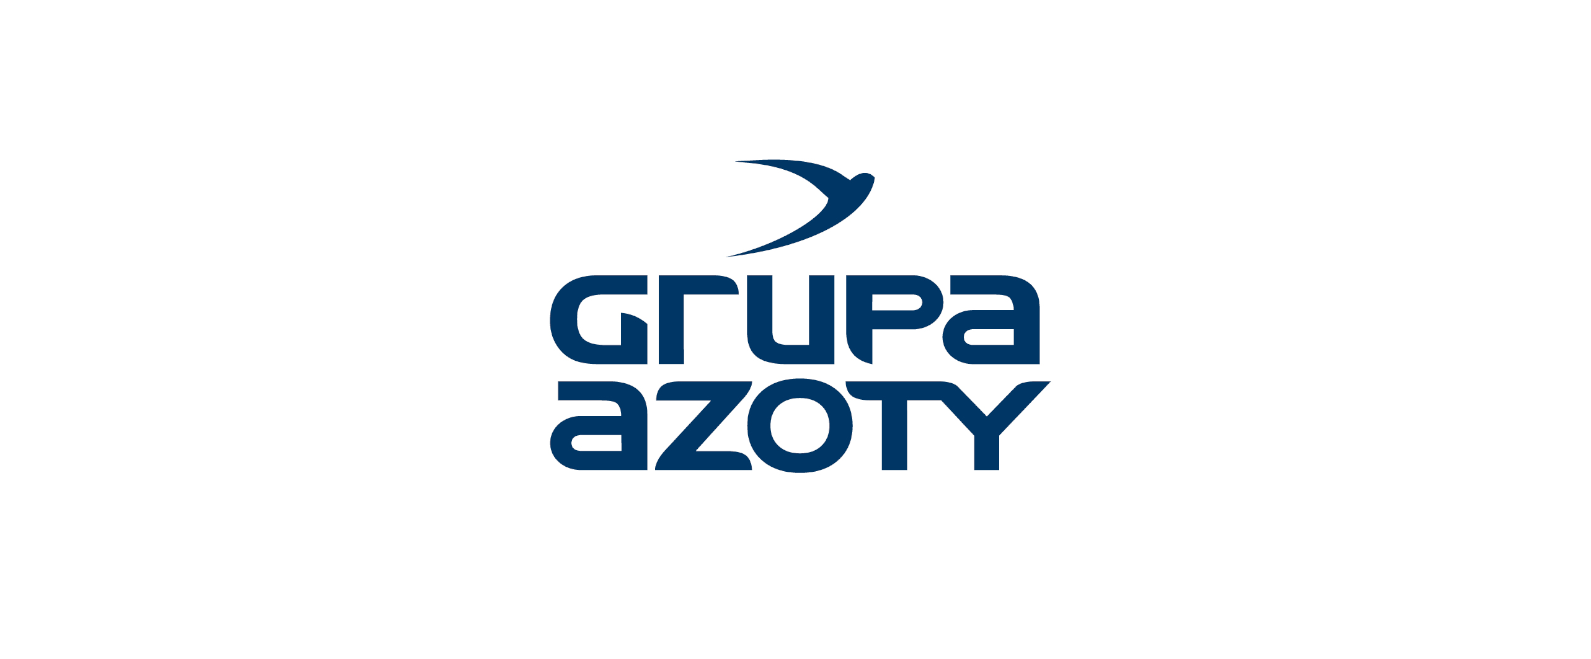 PGNiG as strategic gas supplier to Grupa Azoty